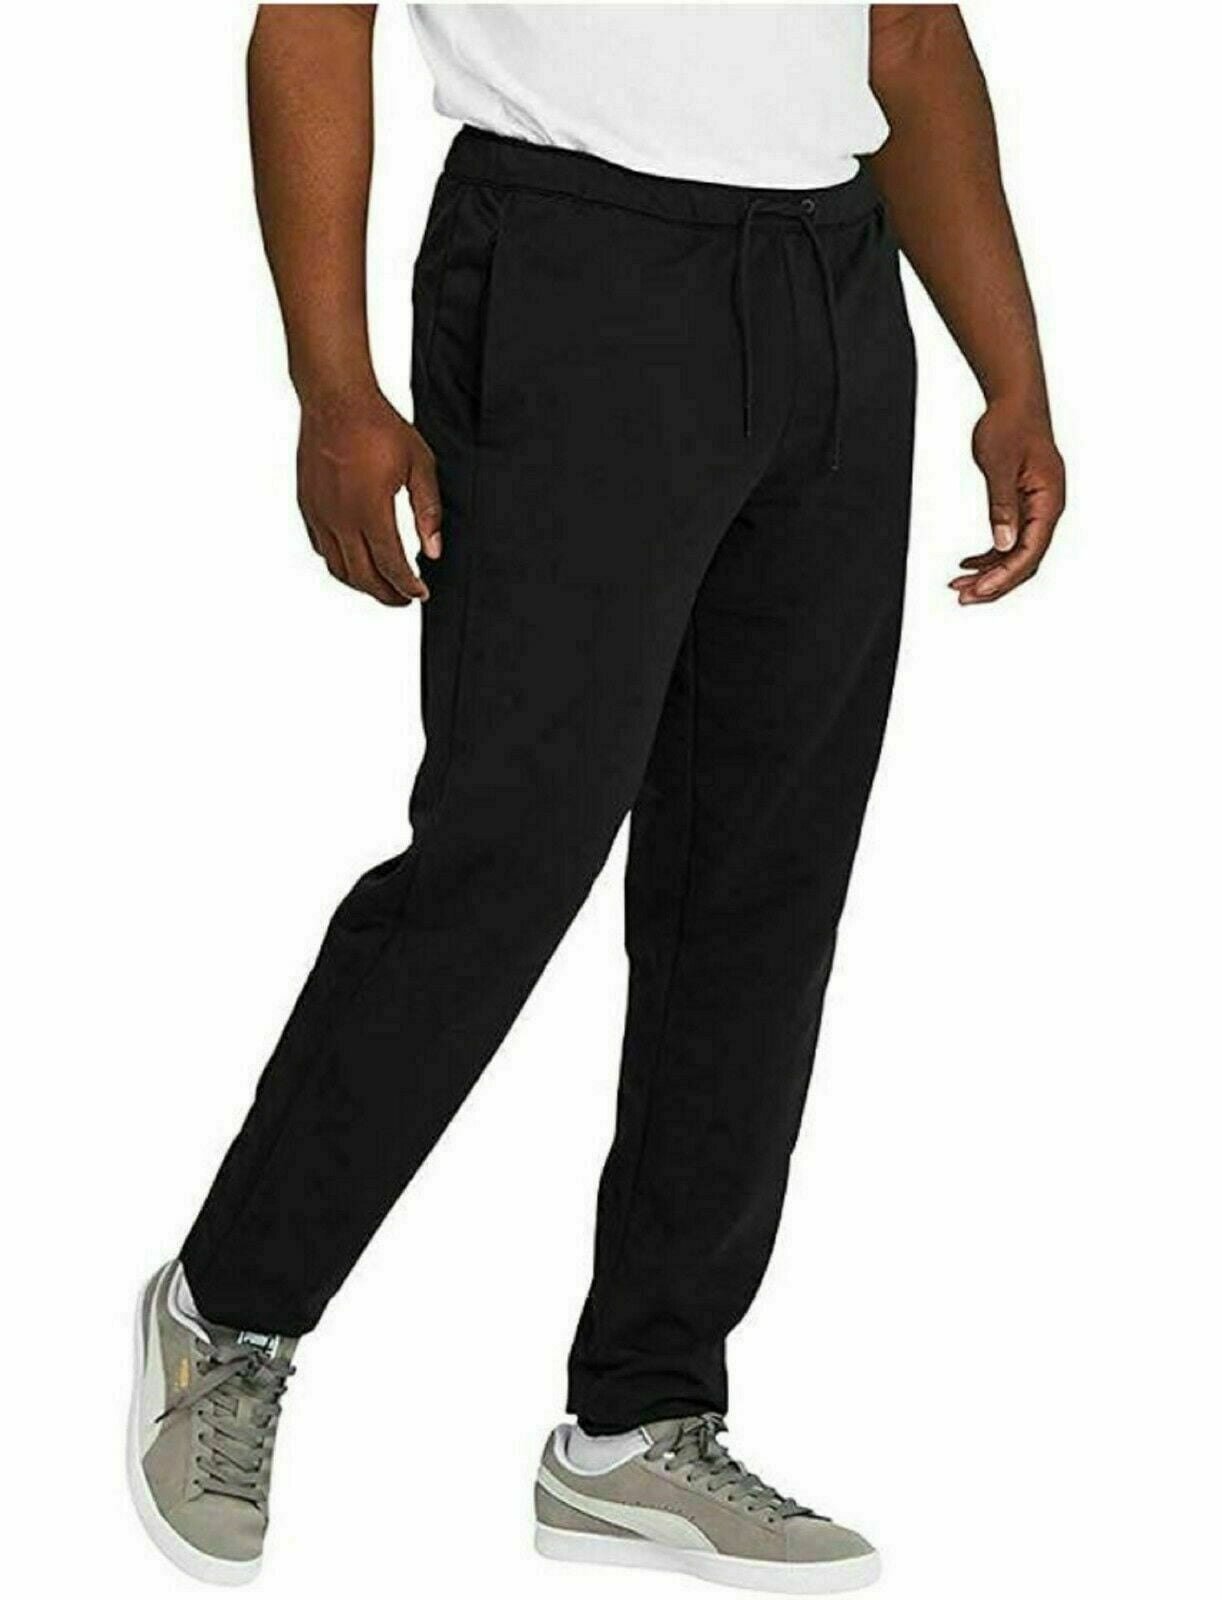 NEW!!! Puma Men's Stretchlite Training Sweat Pants w/Pockets (Black ...